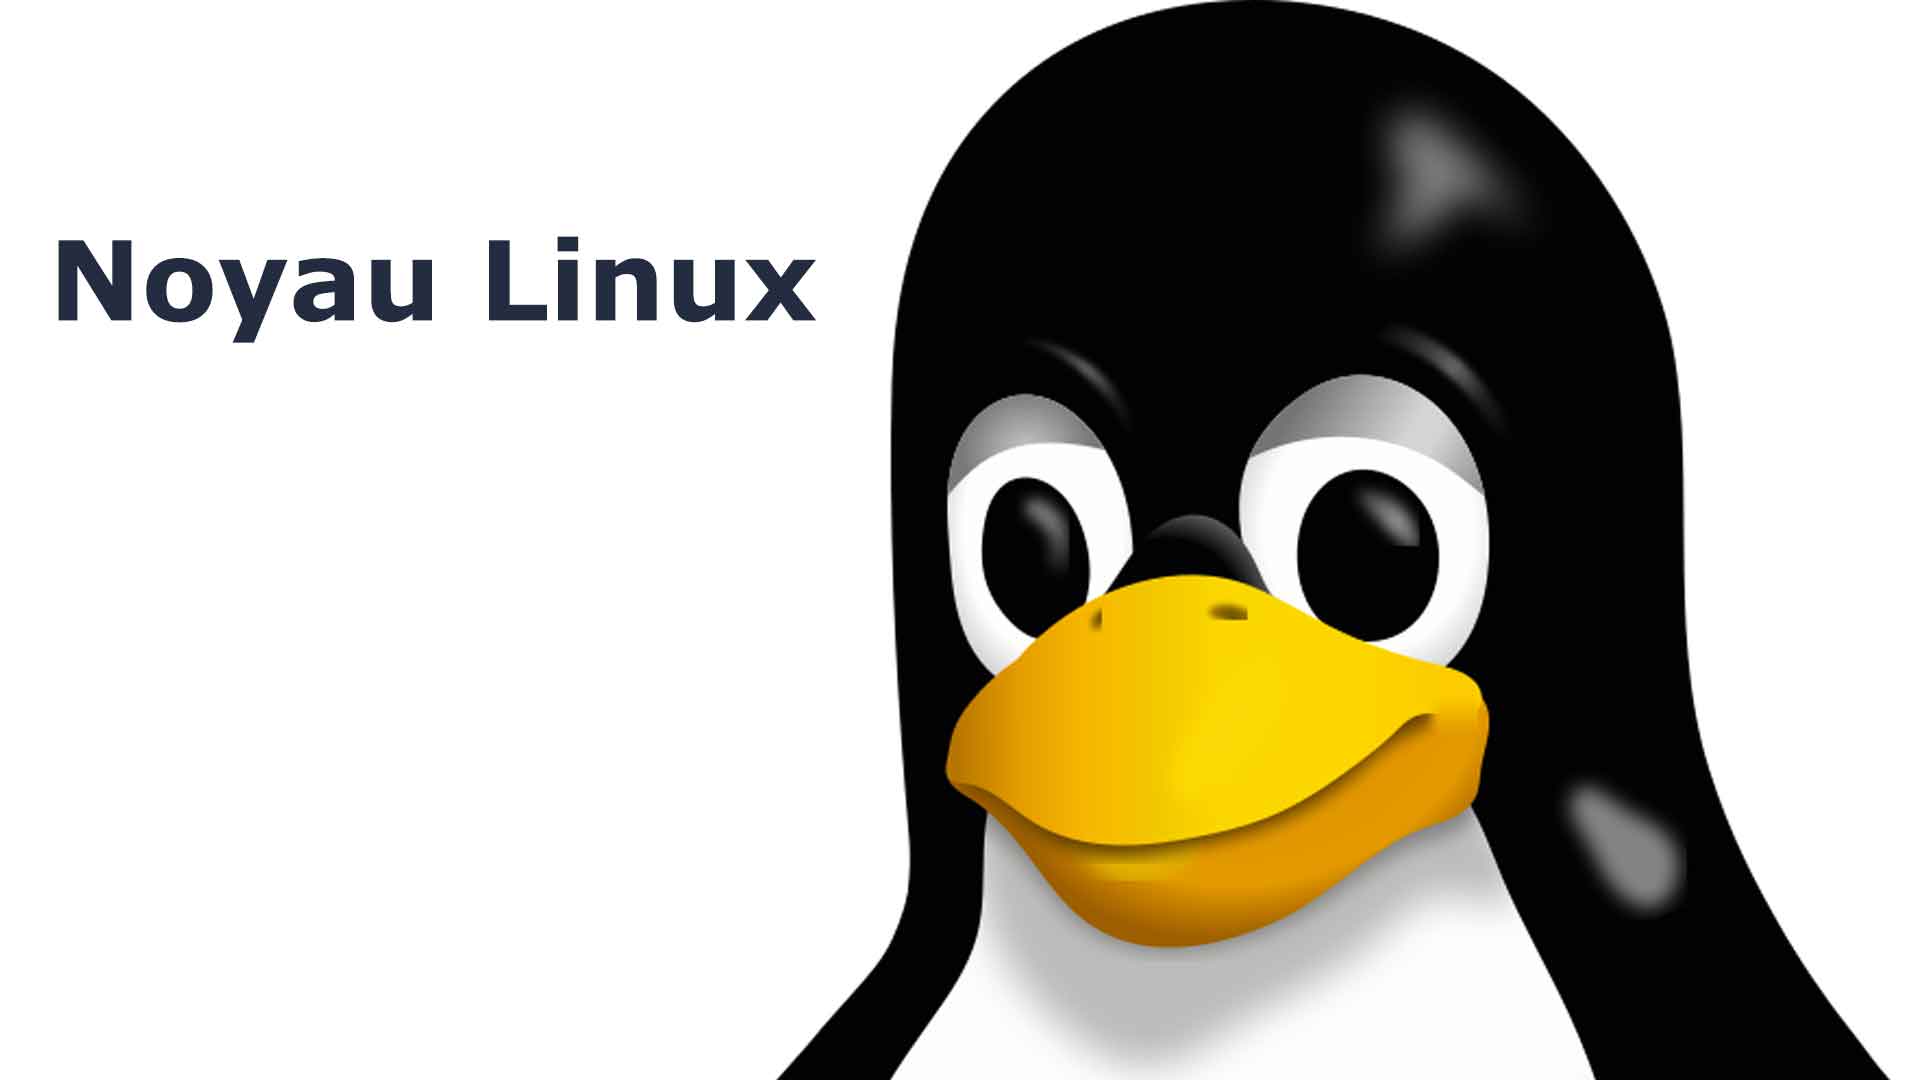 Noyau Linux (Kernel)